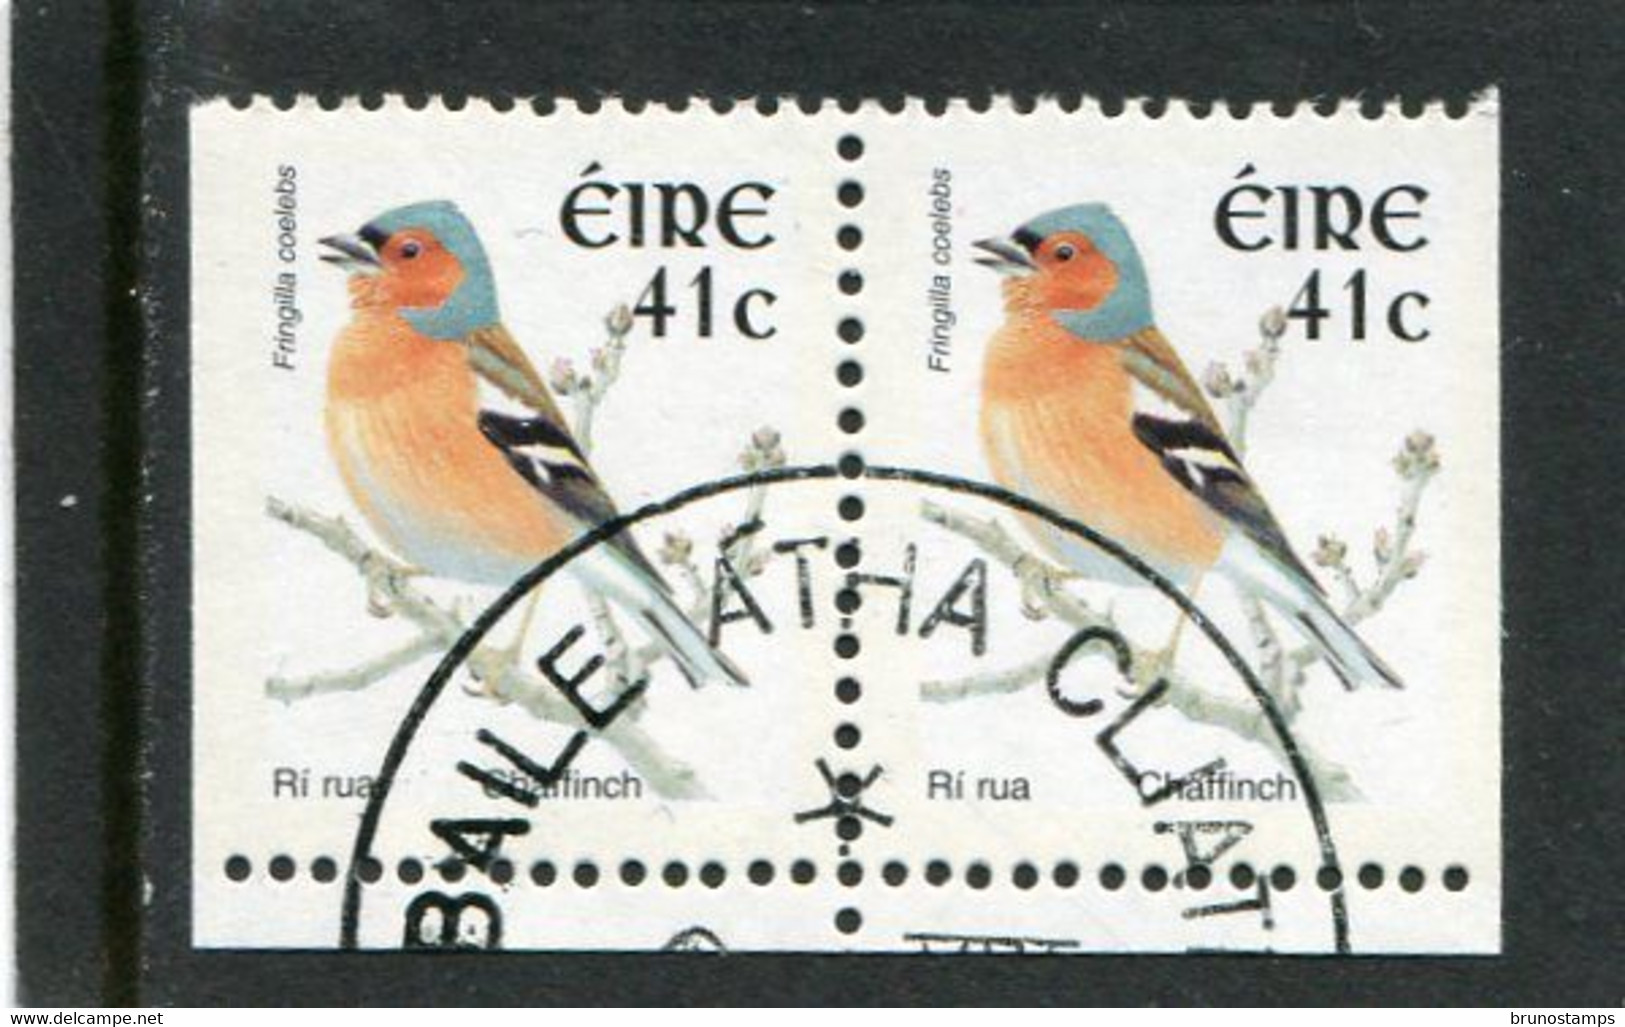 IRELAND/EIRE - 2002  41c  BIRDS  SMALLER SIZE  PAIR  EX BOOKLET  FINE USED - Usados